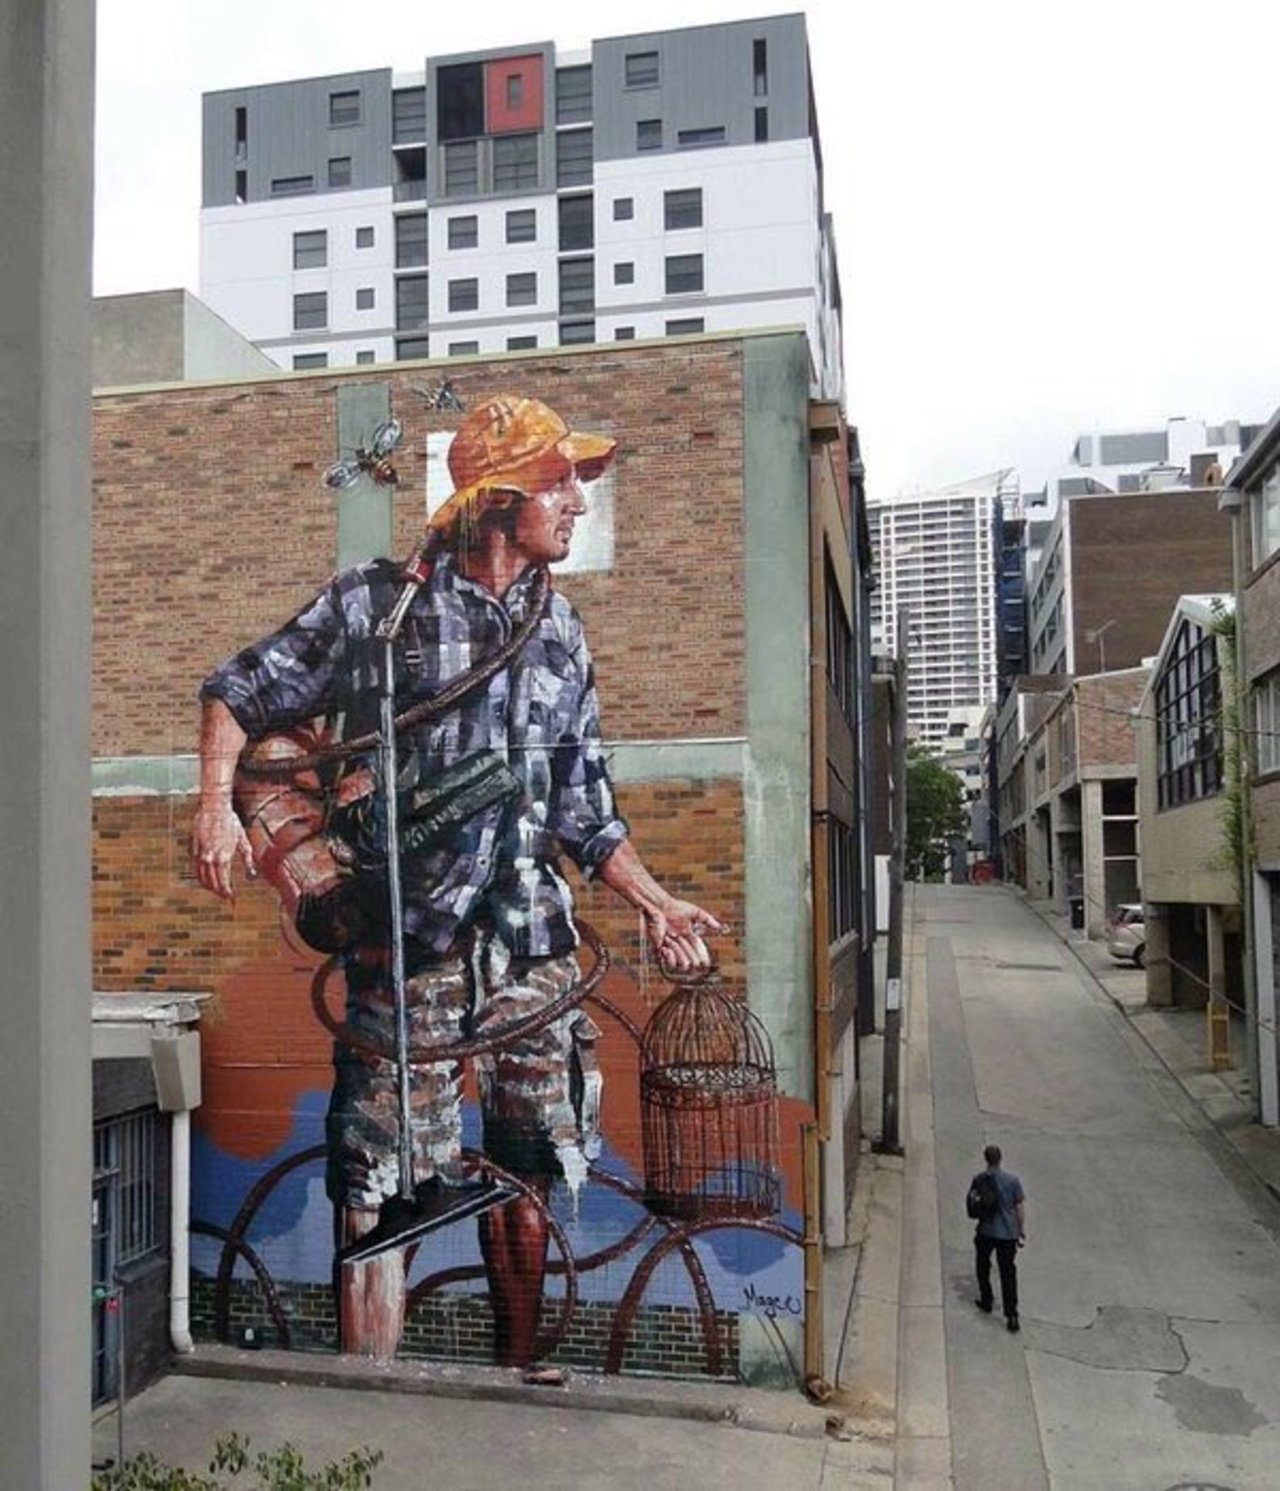 Mural by Fintan Magee #Sydney #Australia #Streetart #urbanart #graffiti #mural #art https://t.co/abvTOne9EL